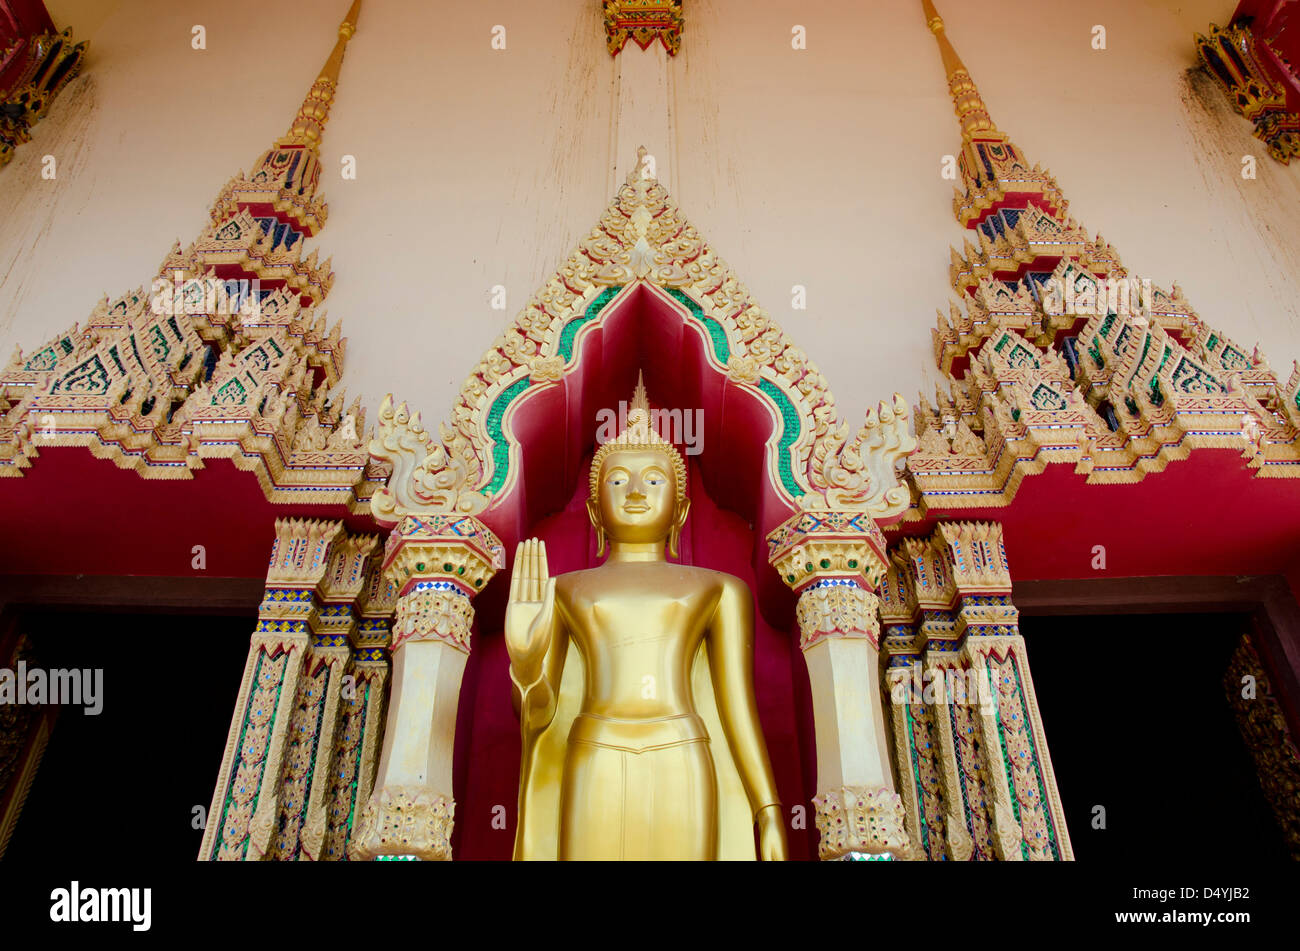 Thailand, Ko Samui (aka Koh Samui). Wat Plai Laem. Golden Buddha statue, temple exterior covered in golden and mirrored tiles. Stock Photo